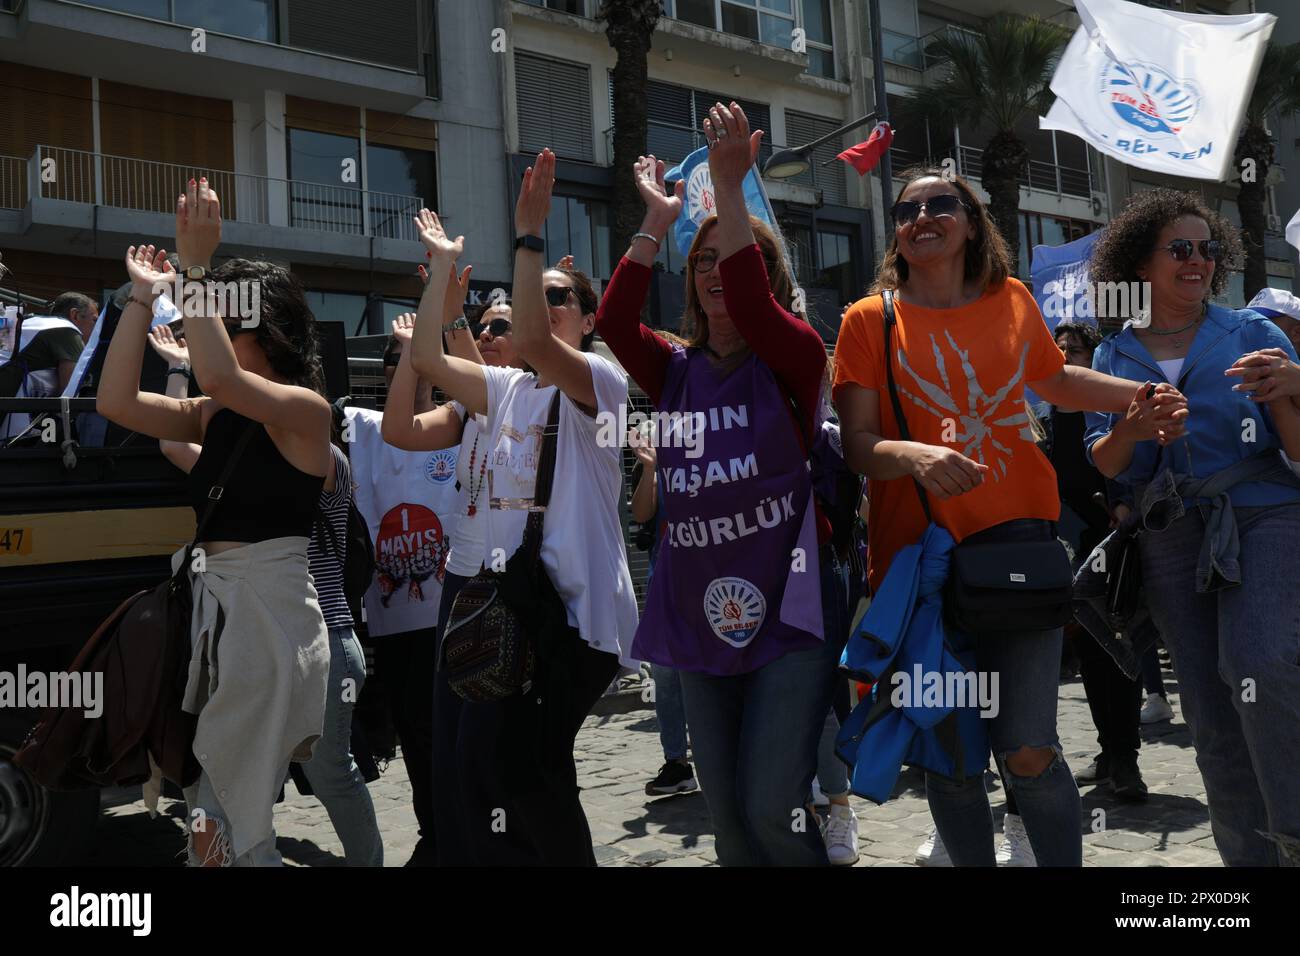 Konak, Izmir - Turkey - 05,01,2023:  Labor unions and political parties celebrate May 1, International Workers' Day in Izmir, Turkey. Stock Photo